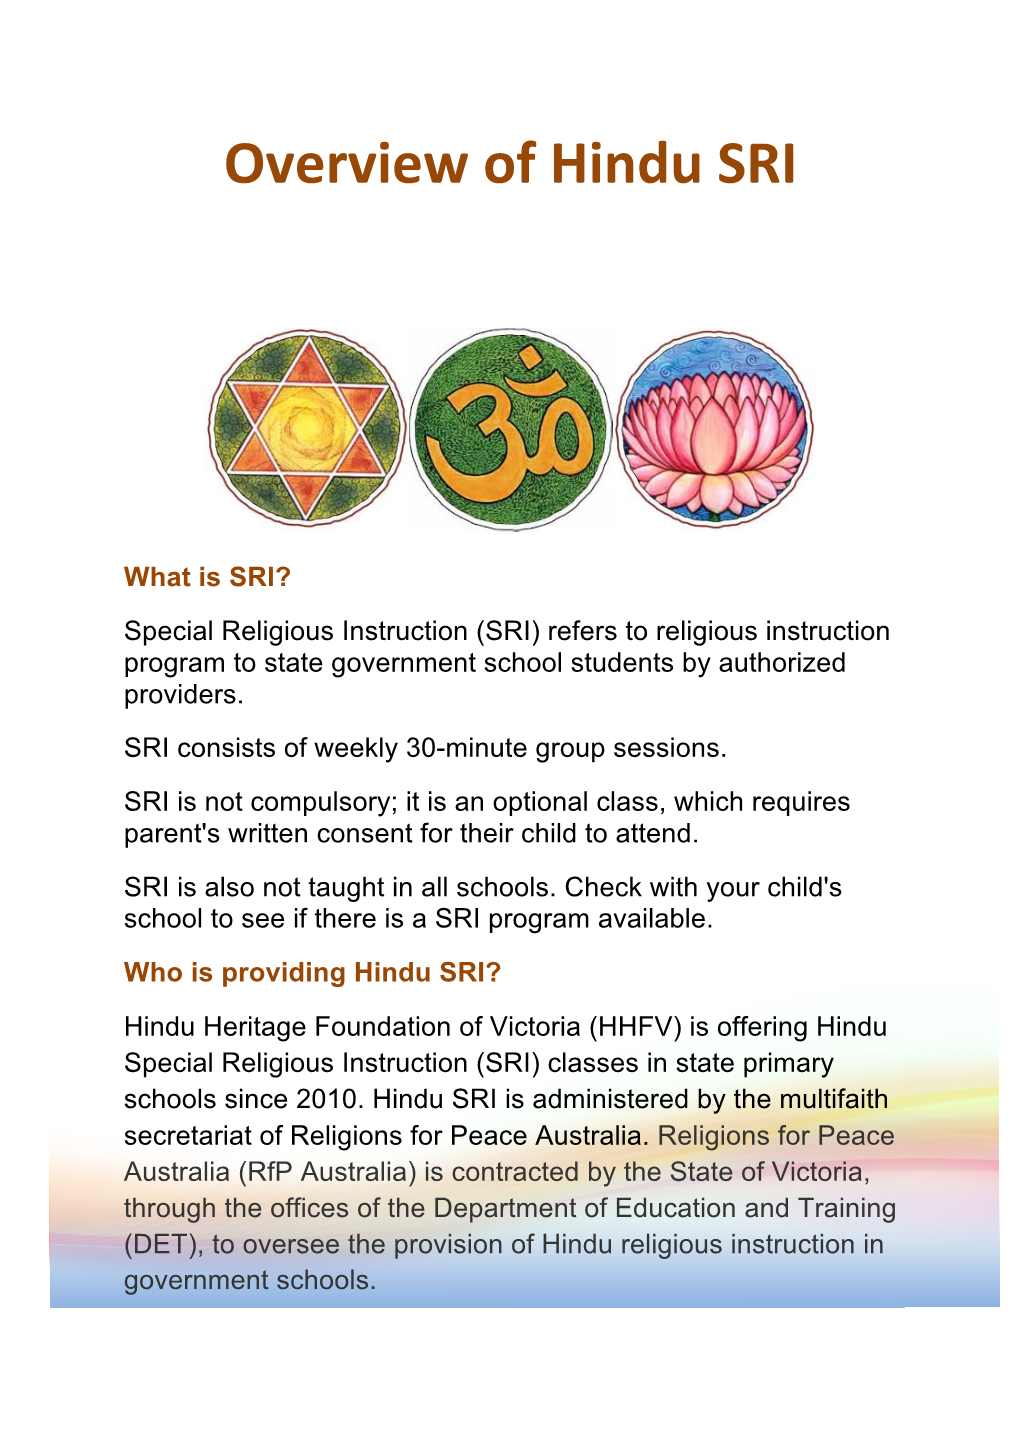 Hindu SRI Overview